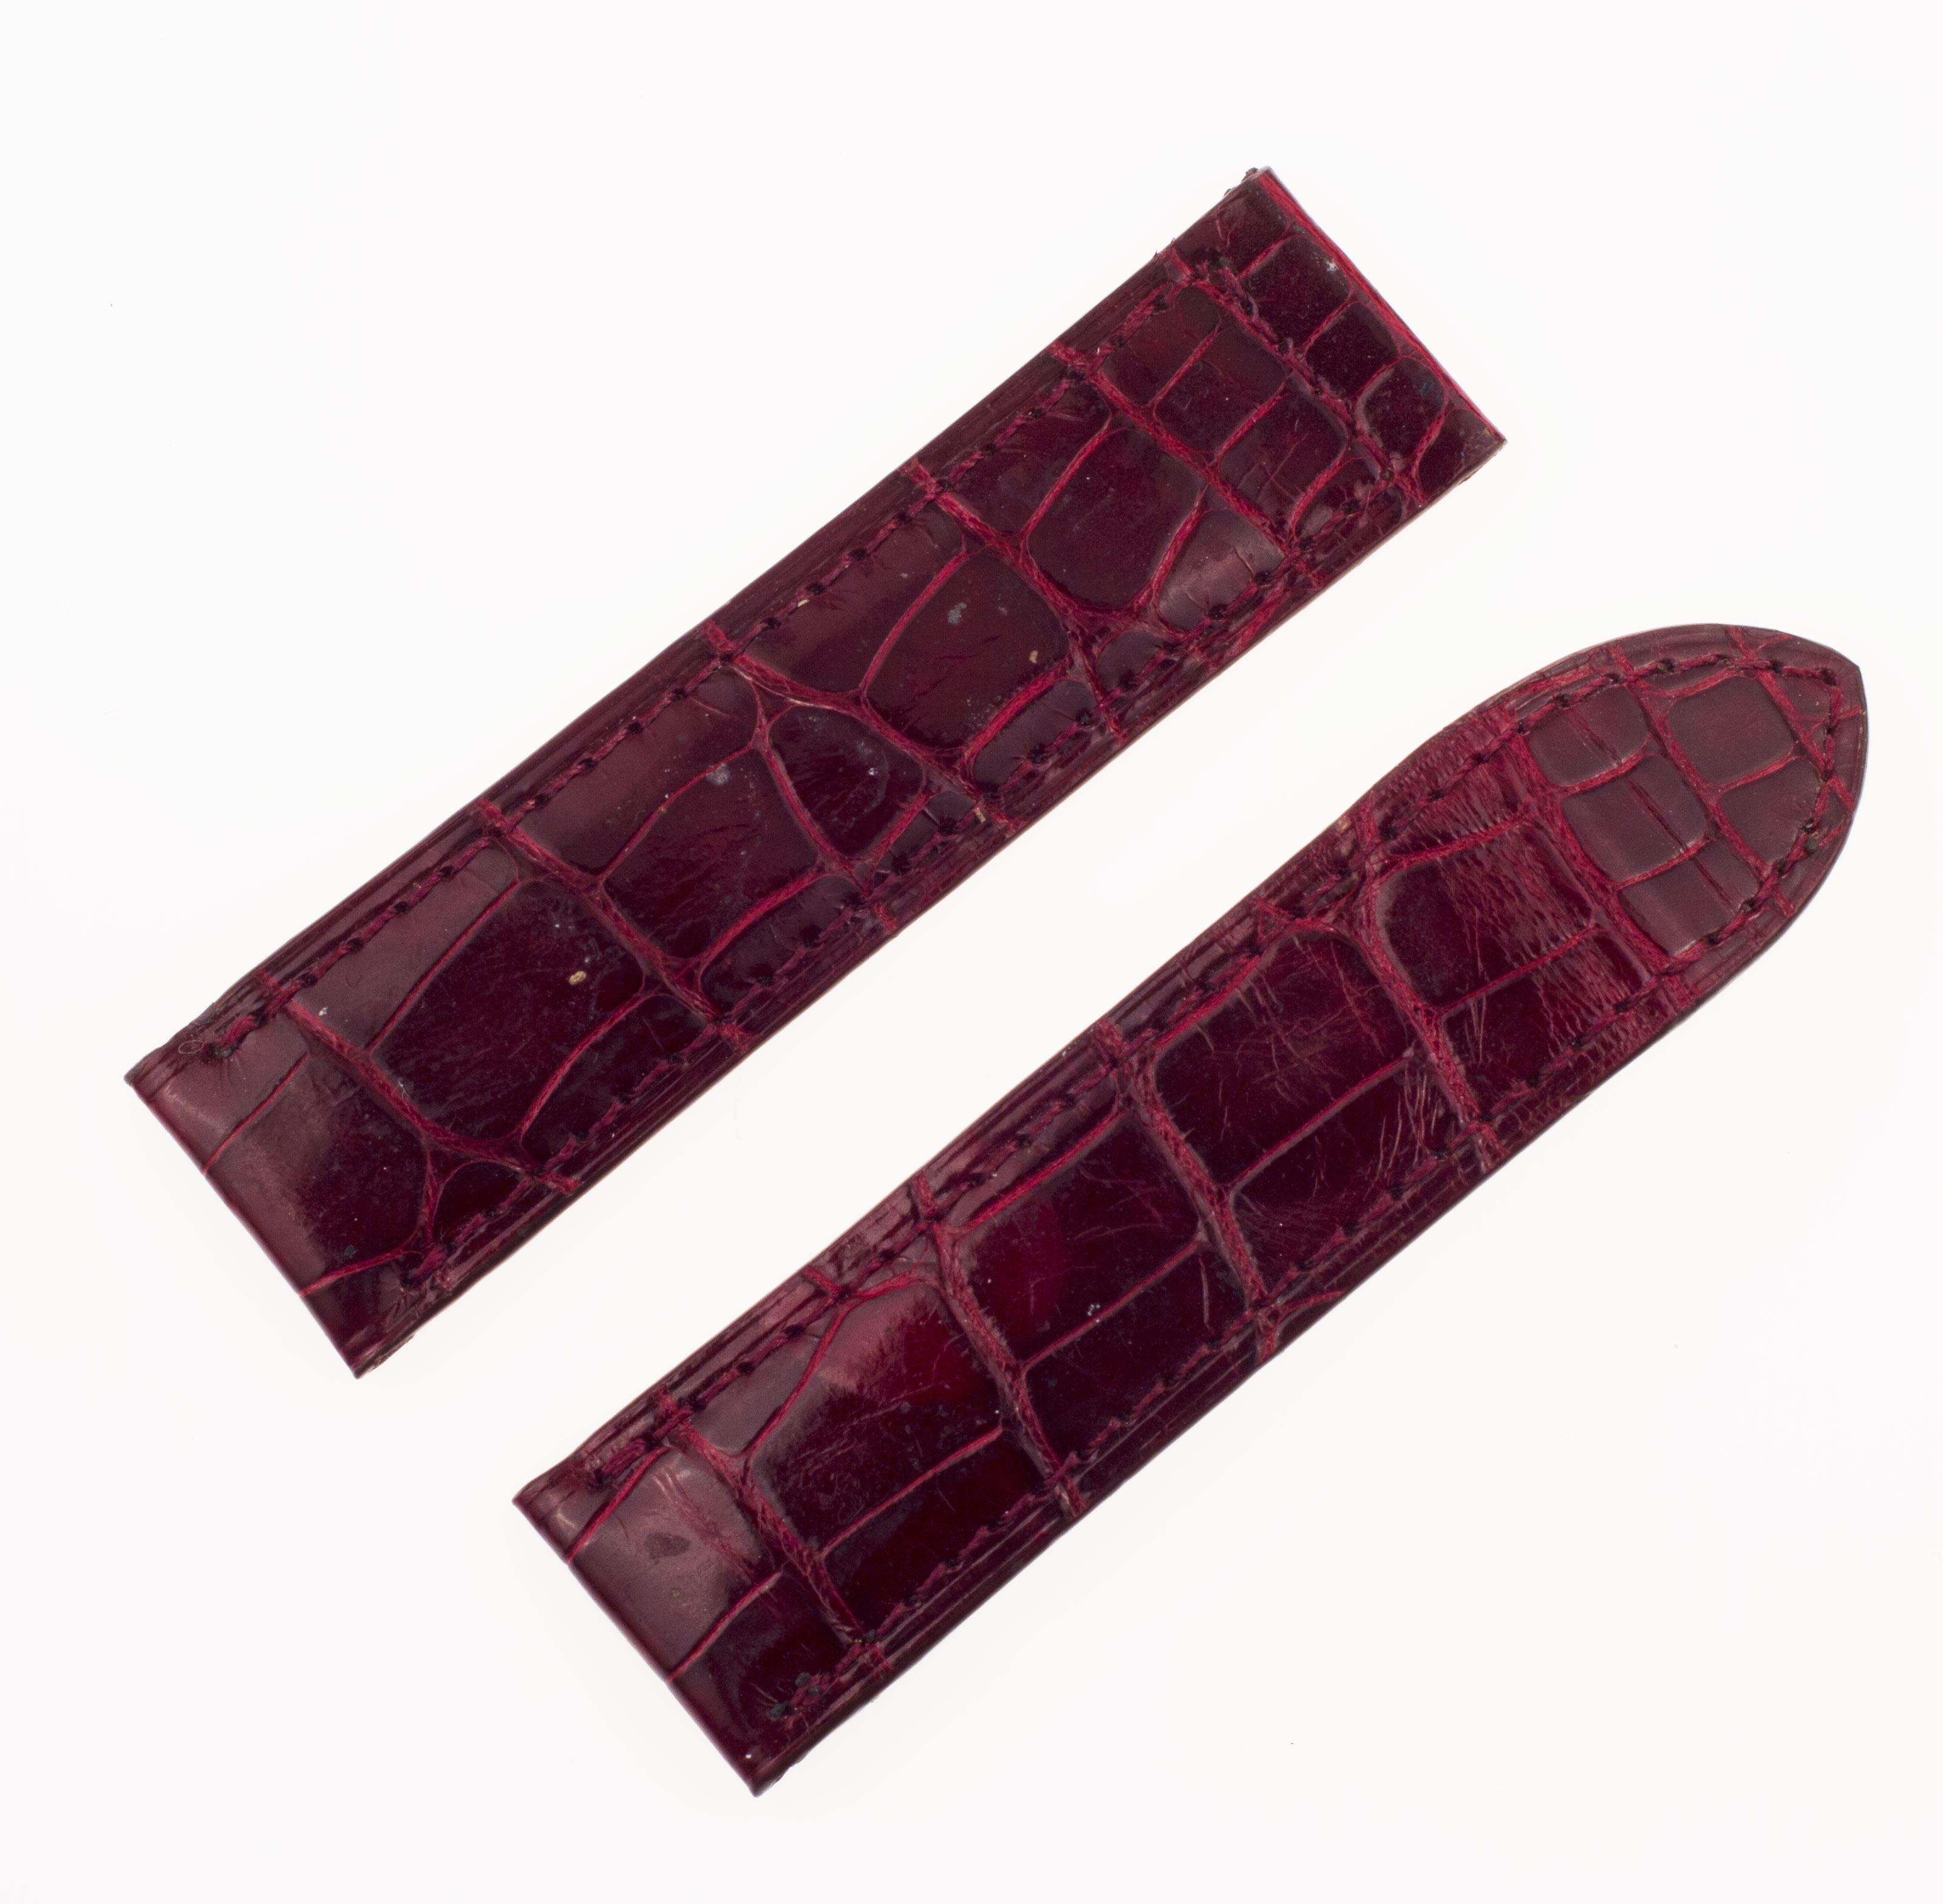 Cartier burgundy/bourdeaux alligator strap (18mm x 18mm) image 1